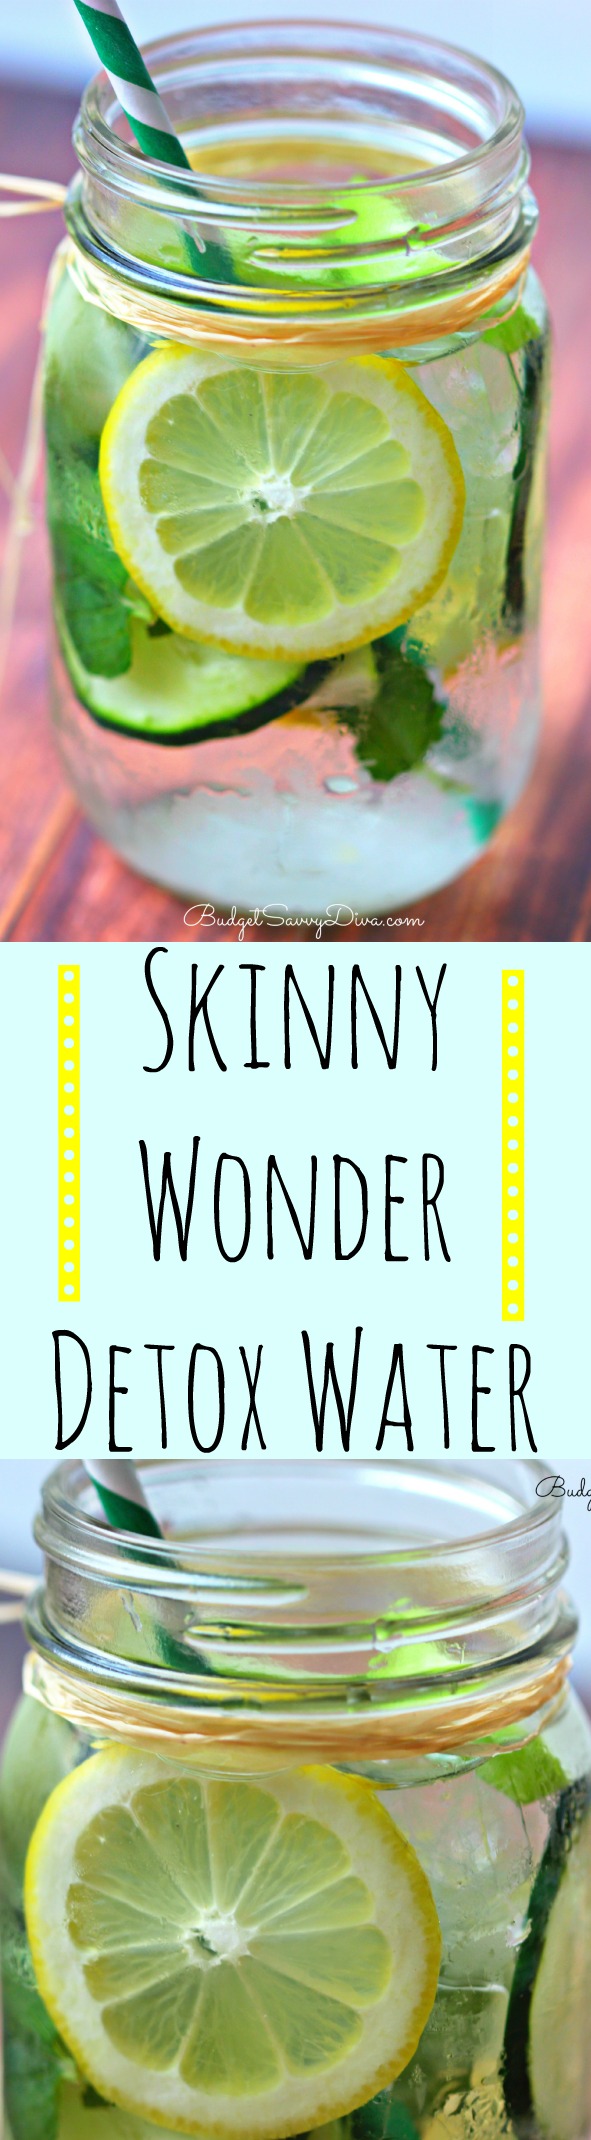 Skinny Wonder Detox Water Recipe 